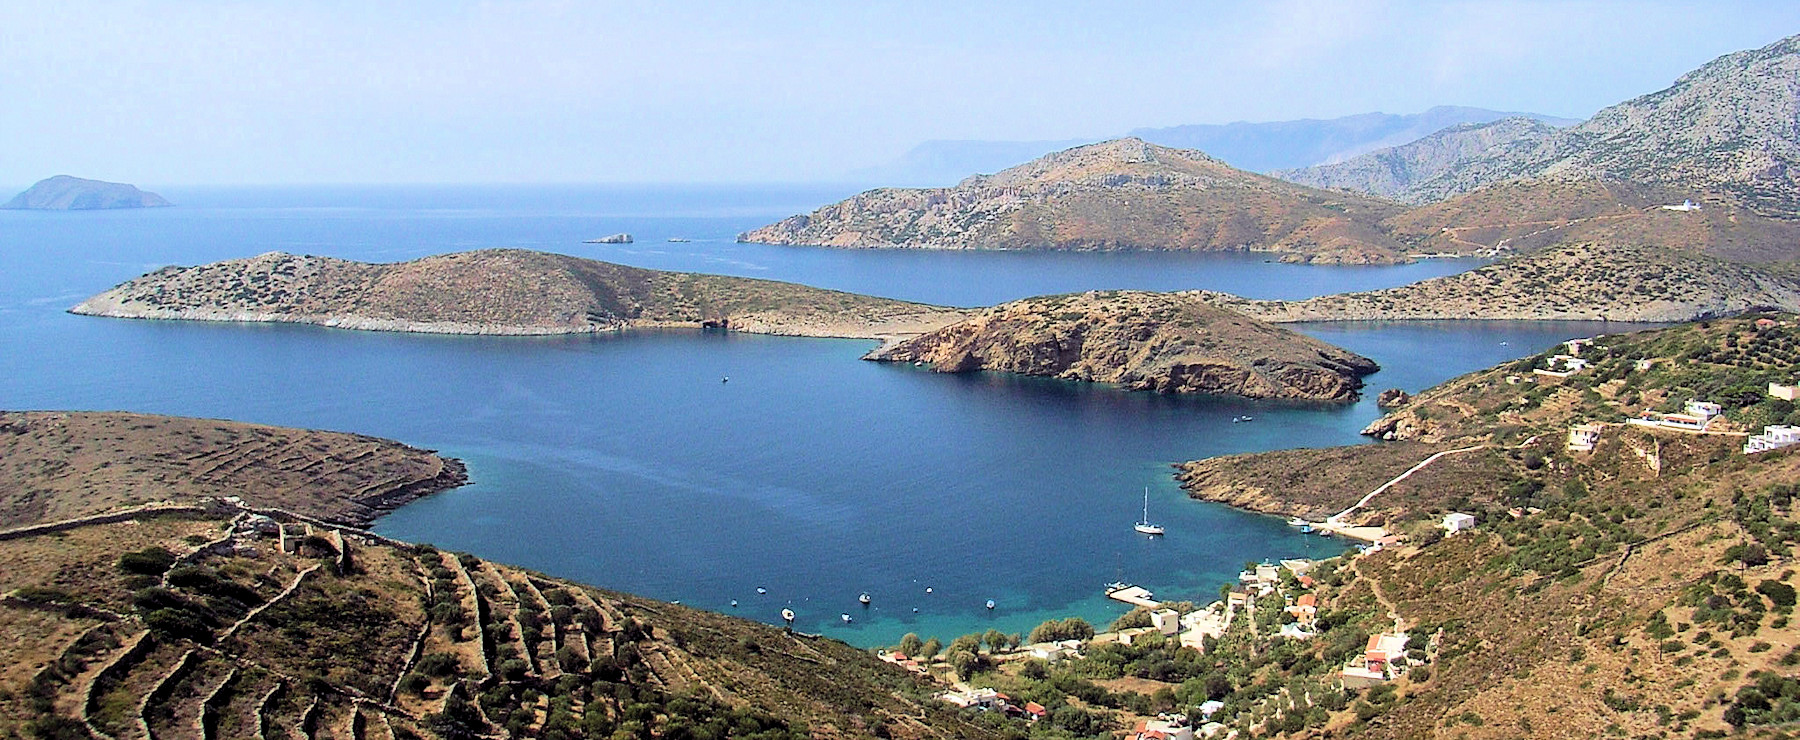 North-East Aegean Islands